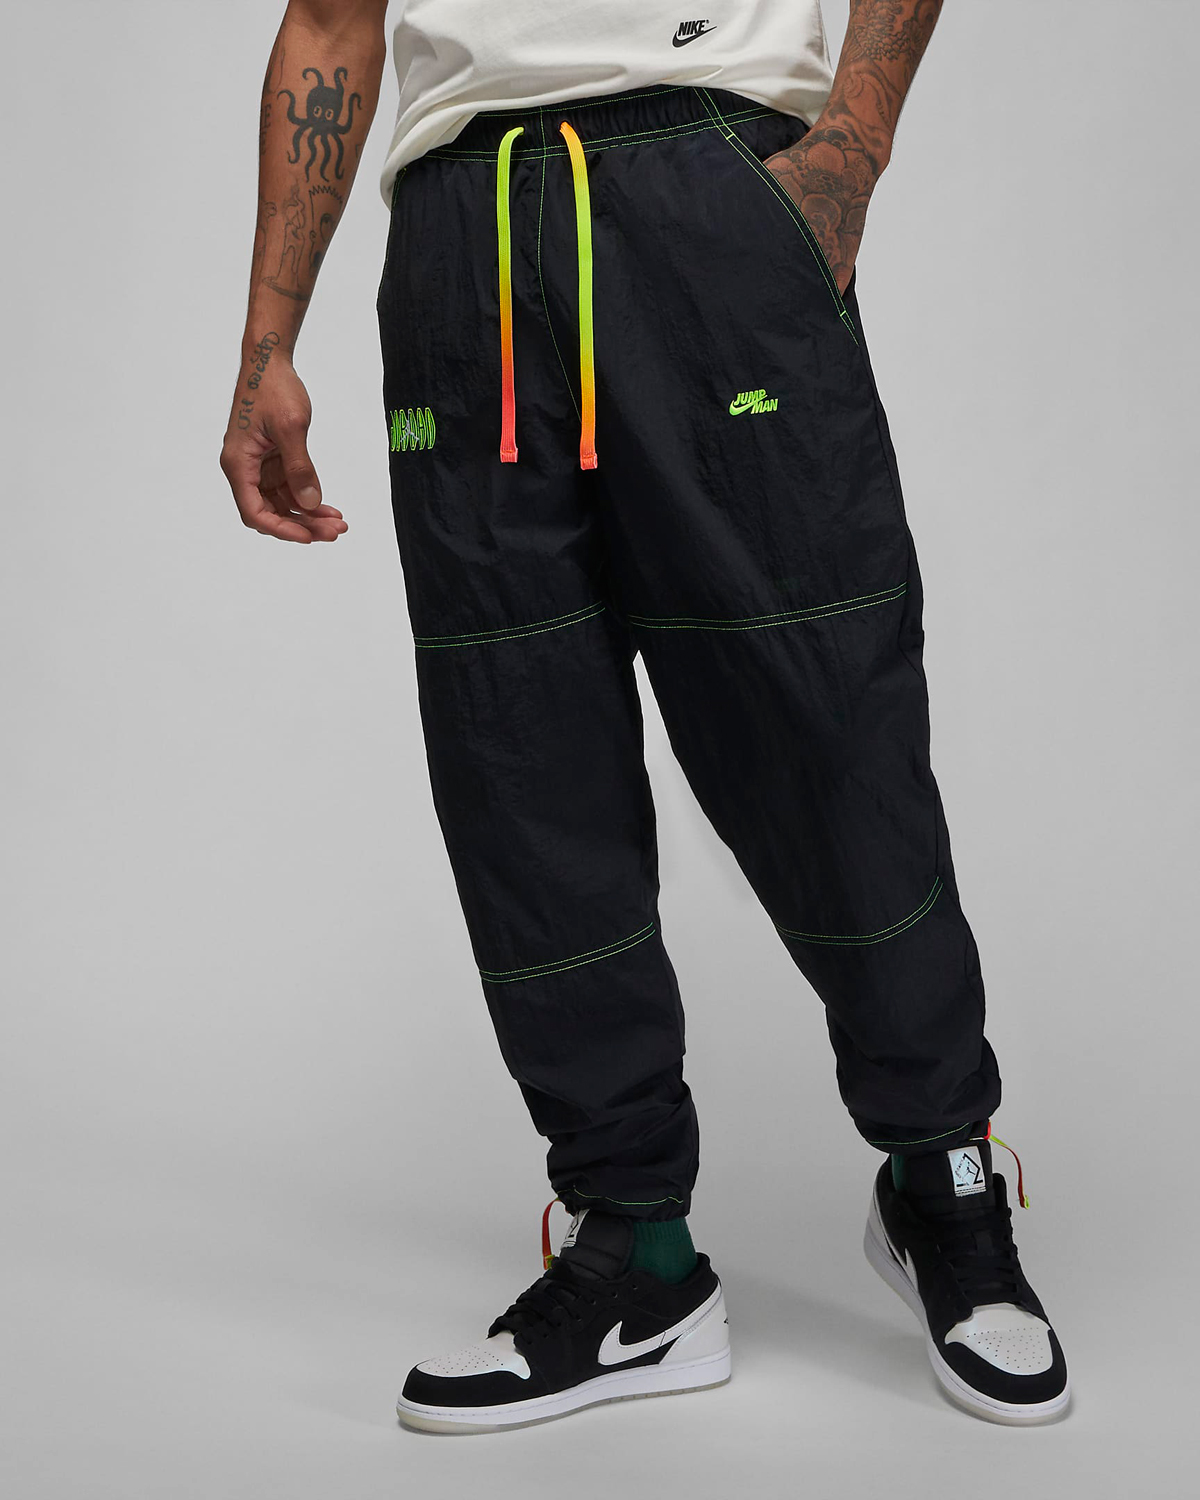 Jordan-Flight-MVP-Woven-Pants-Black-Electric-Green-Multi-Color